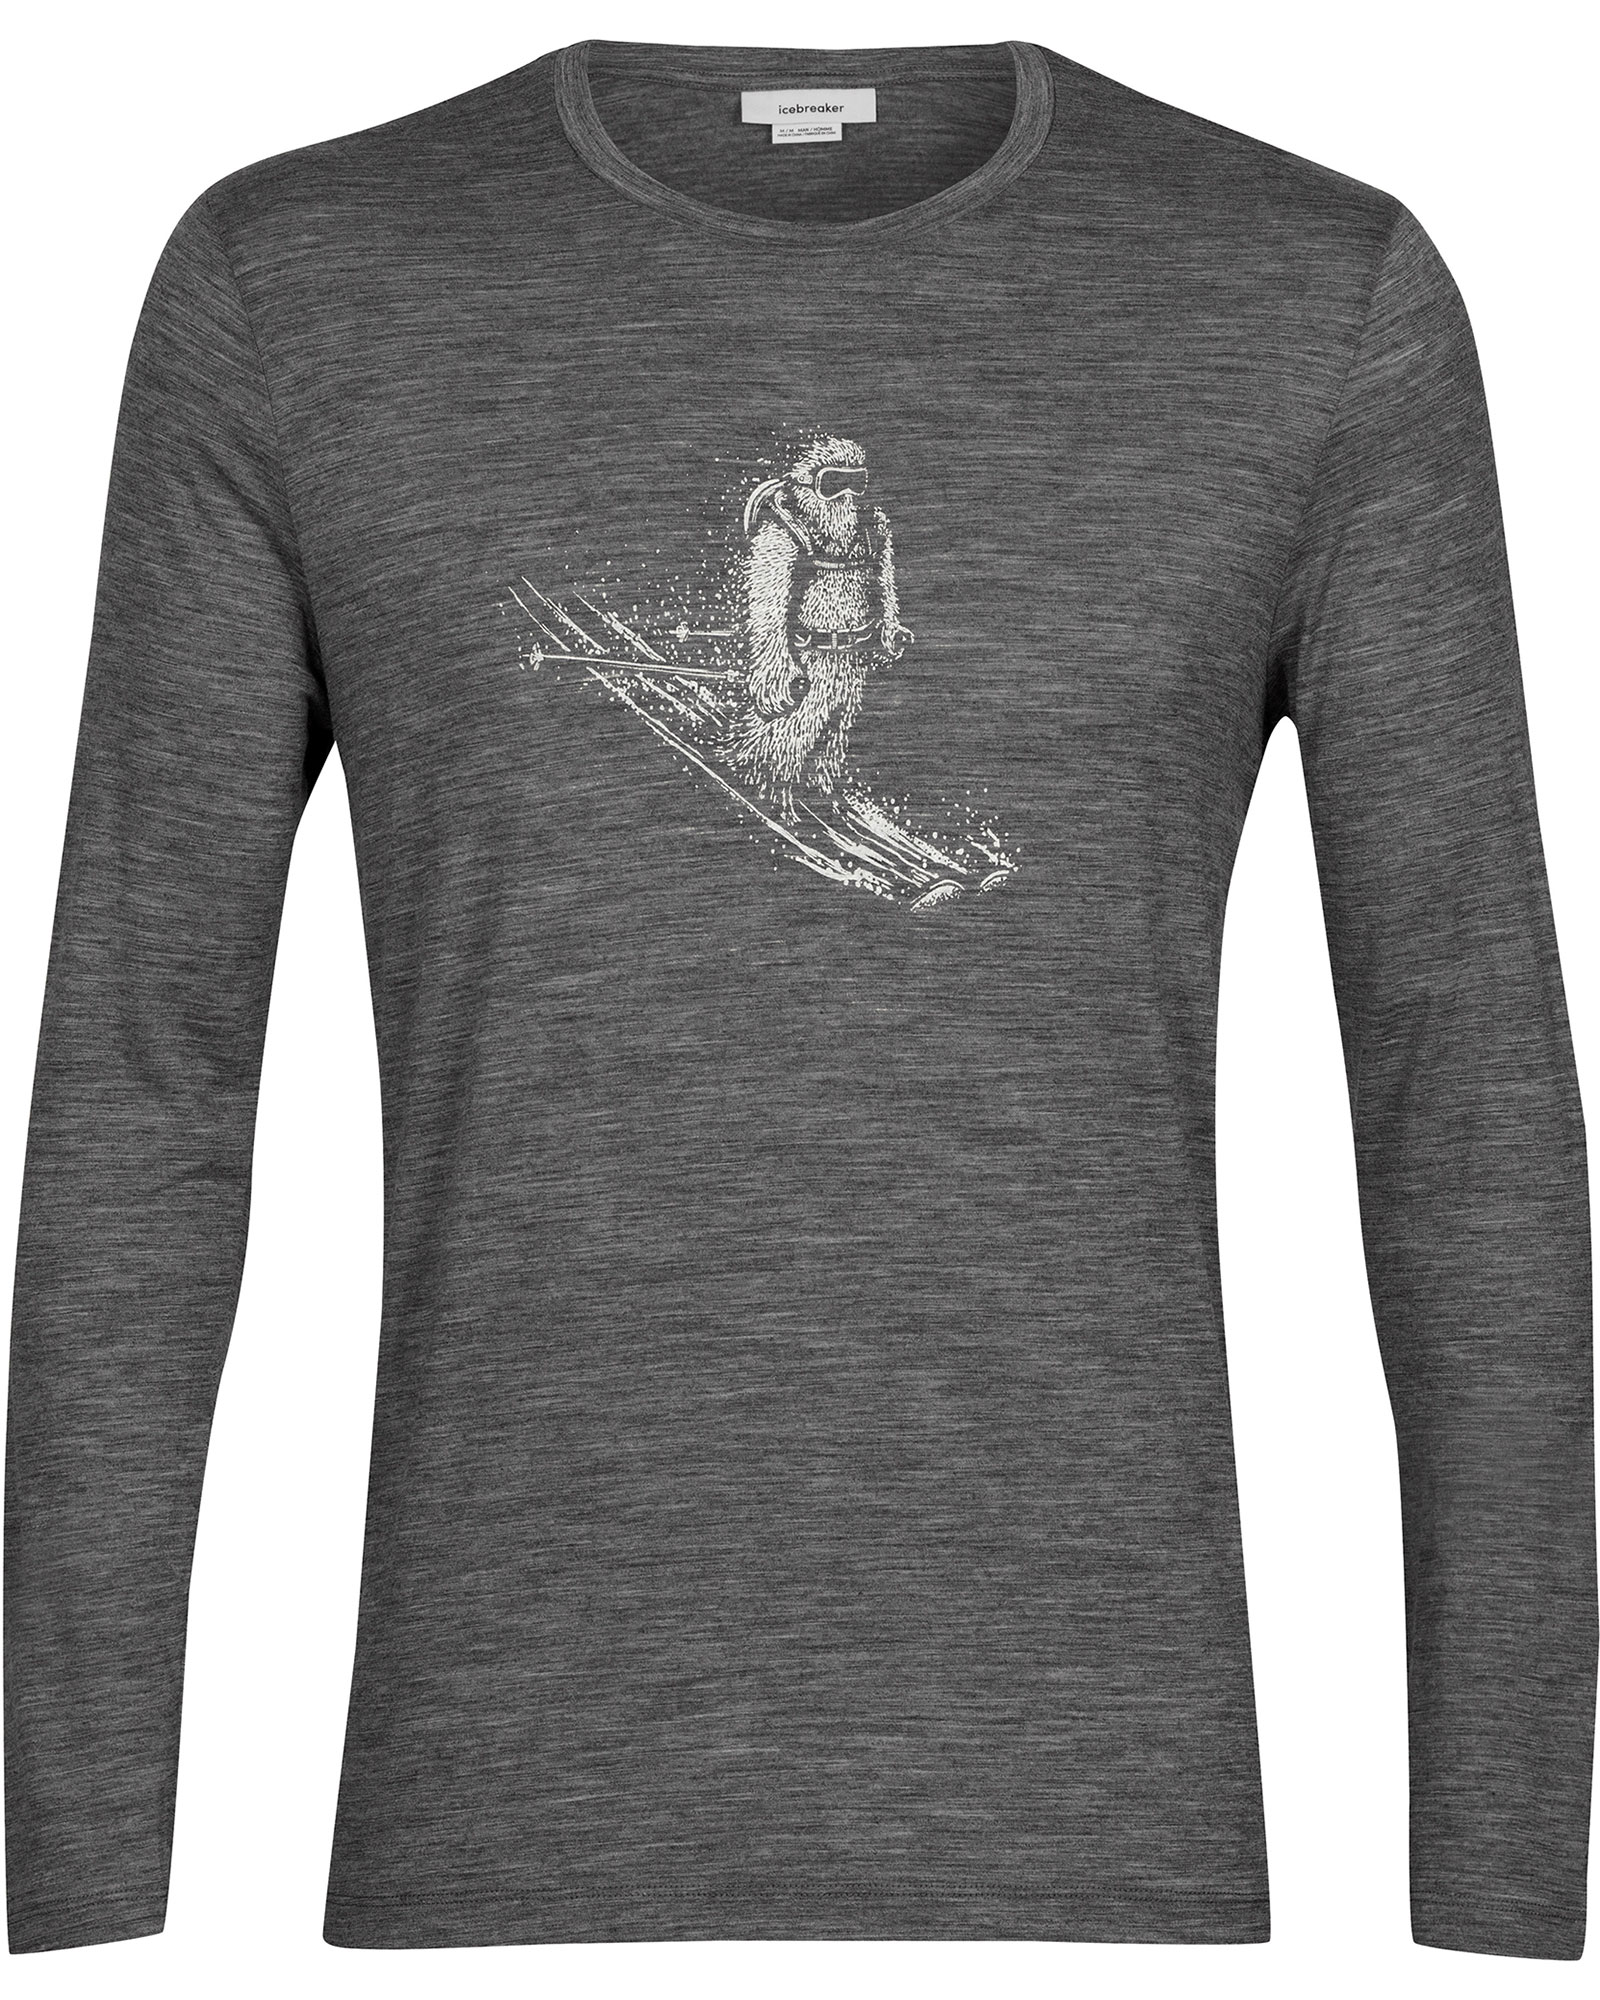 Icebreaker Tech Lite 2 Skiing Yeti Men’s Merino Long Sleeve T Shirt - Gritstone Heather XL